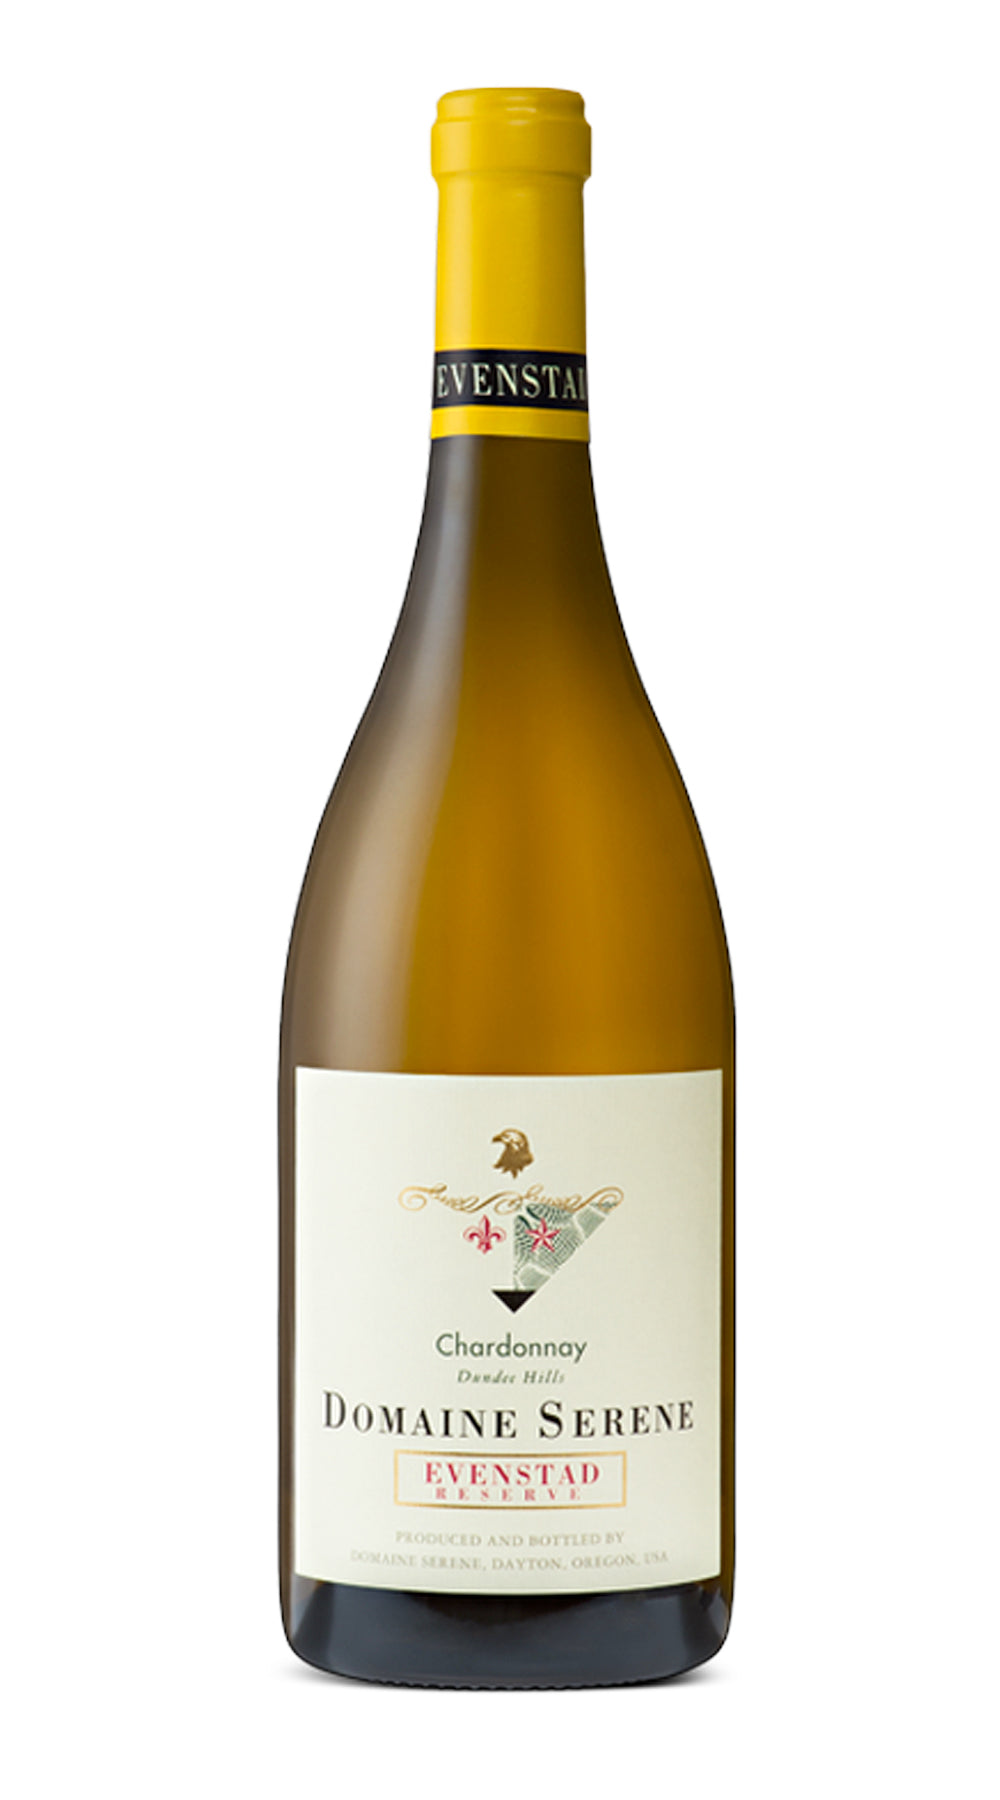 Domaine Serene Chardonnay 'Evenstad Reserve'